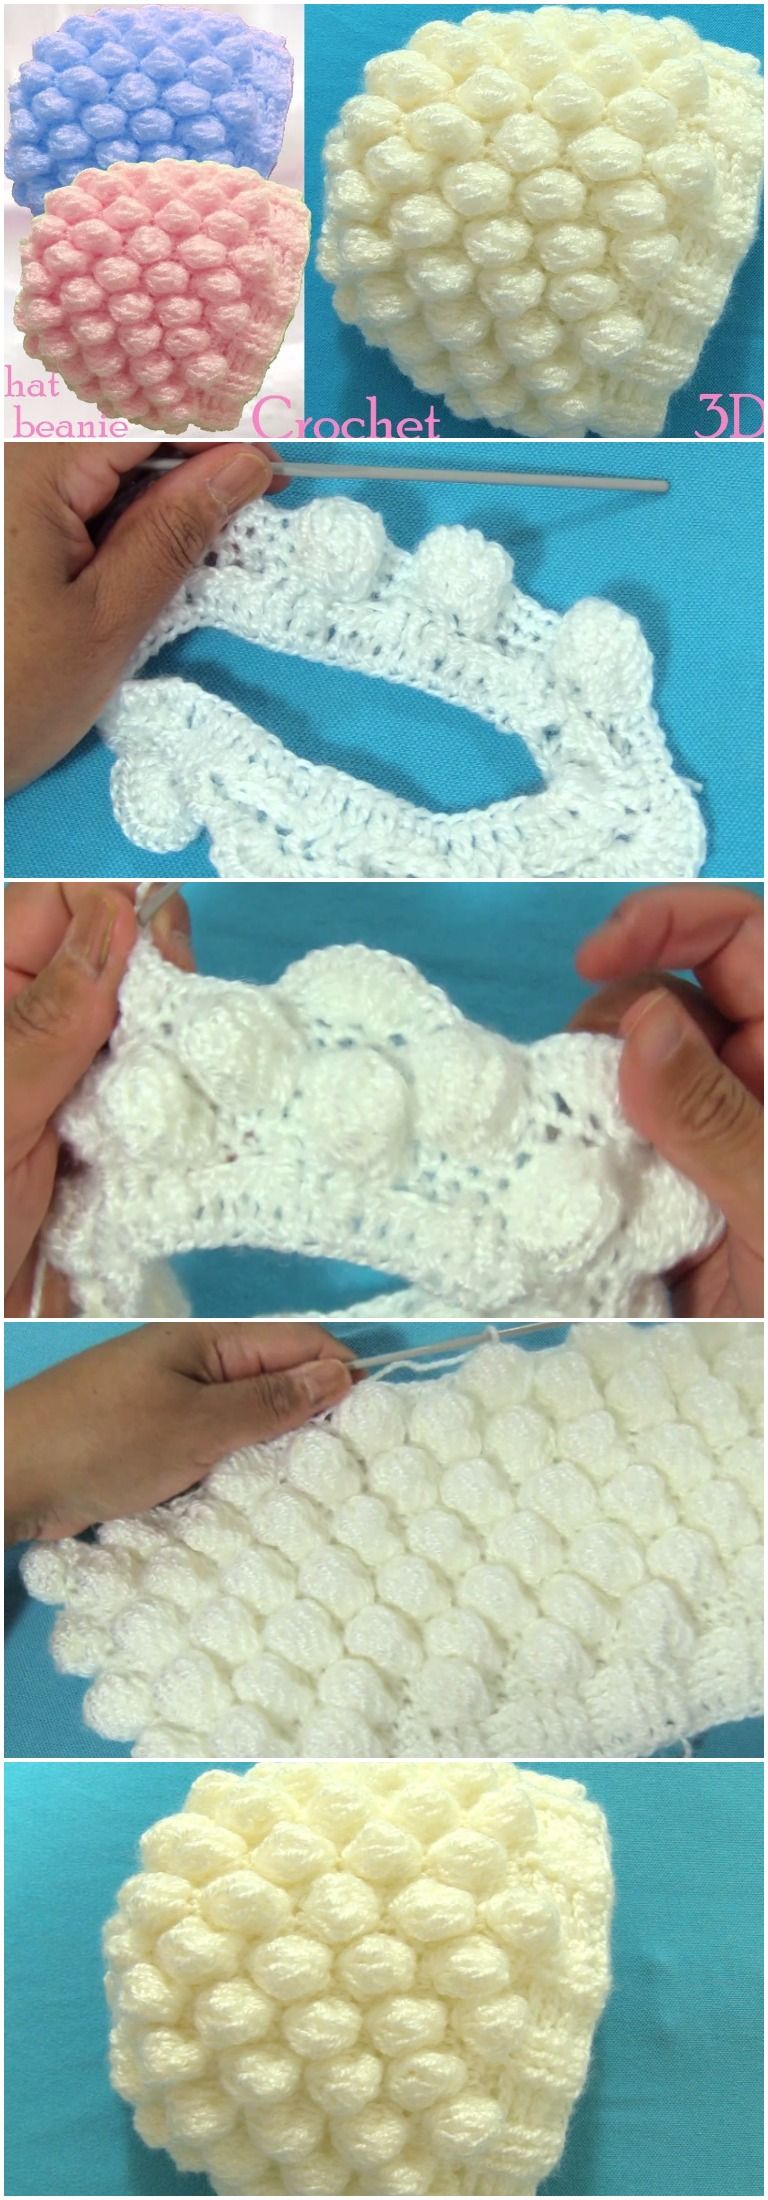 Crochet 3D Beanie Hat With Snow Balls Stitch Free Pattern [Video]